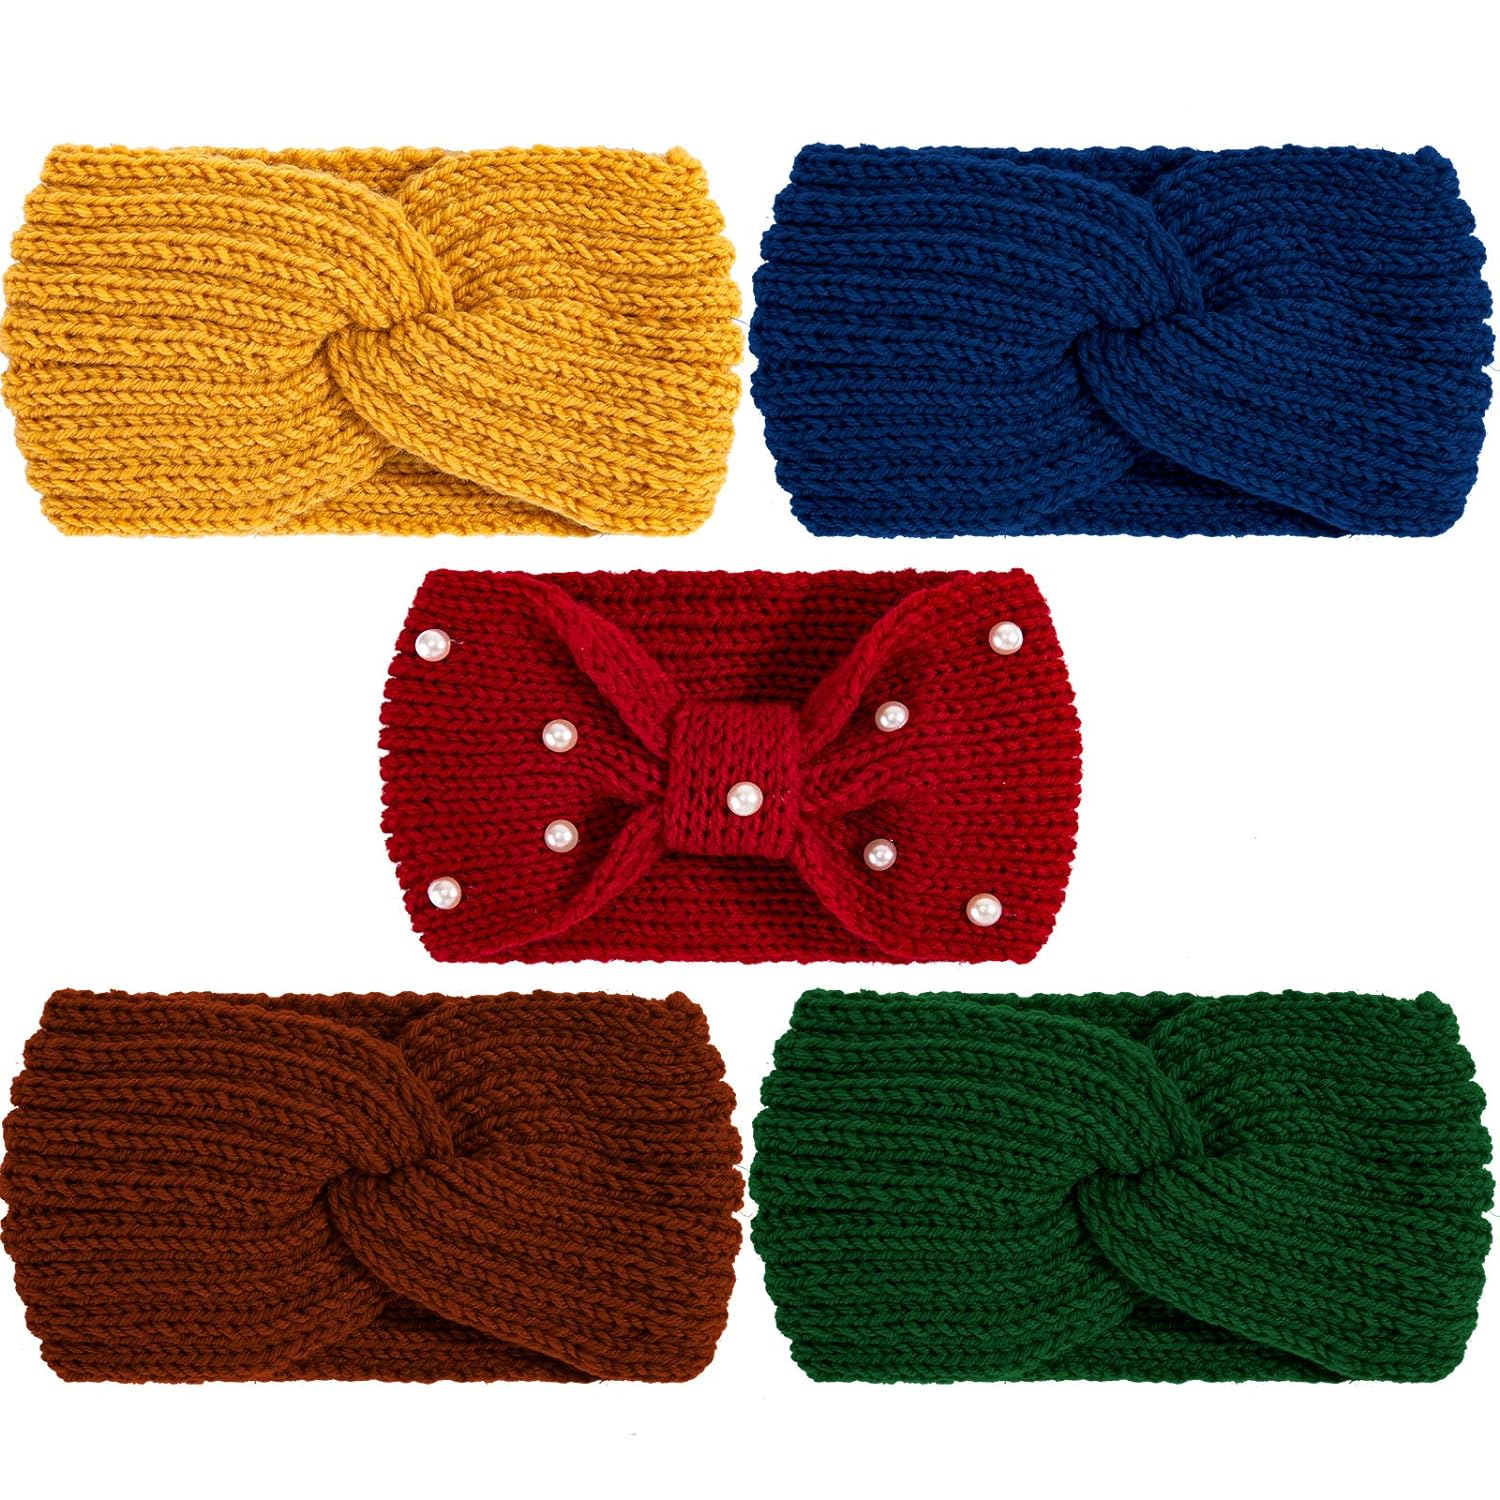 Whaline 5 Pieces Winter Knit Headbands Chunky Knit Headbands,4 Elastic Turban Head Wraps and 1 Pearl Crochet Hair Band, Ear Warmer Crochet Head Wraps for Women Girls (Bright & Dark Colors)